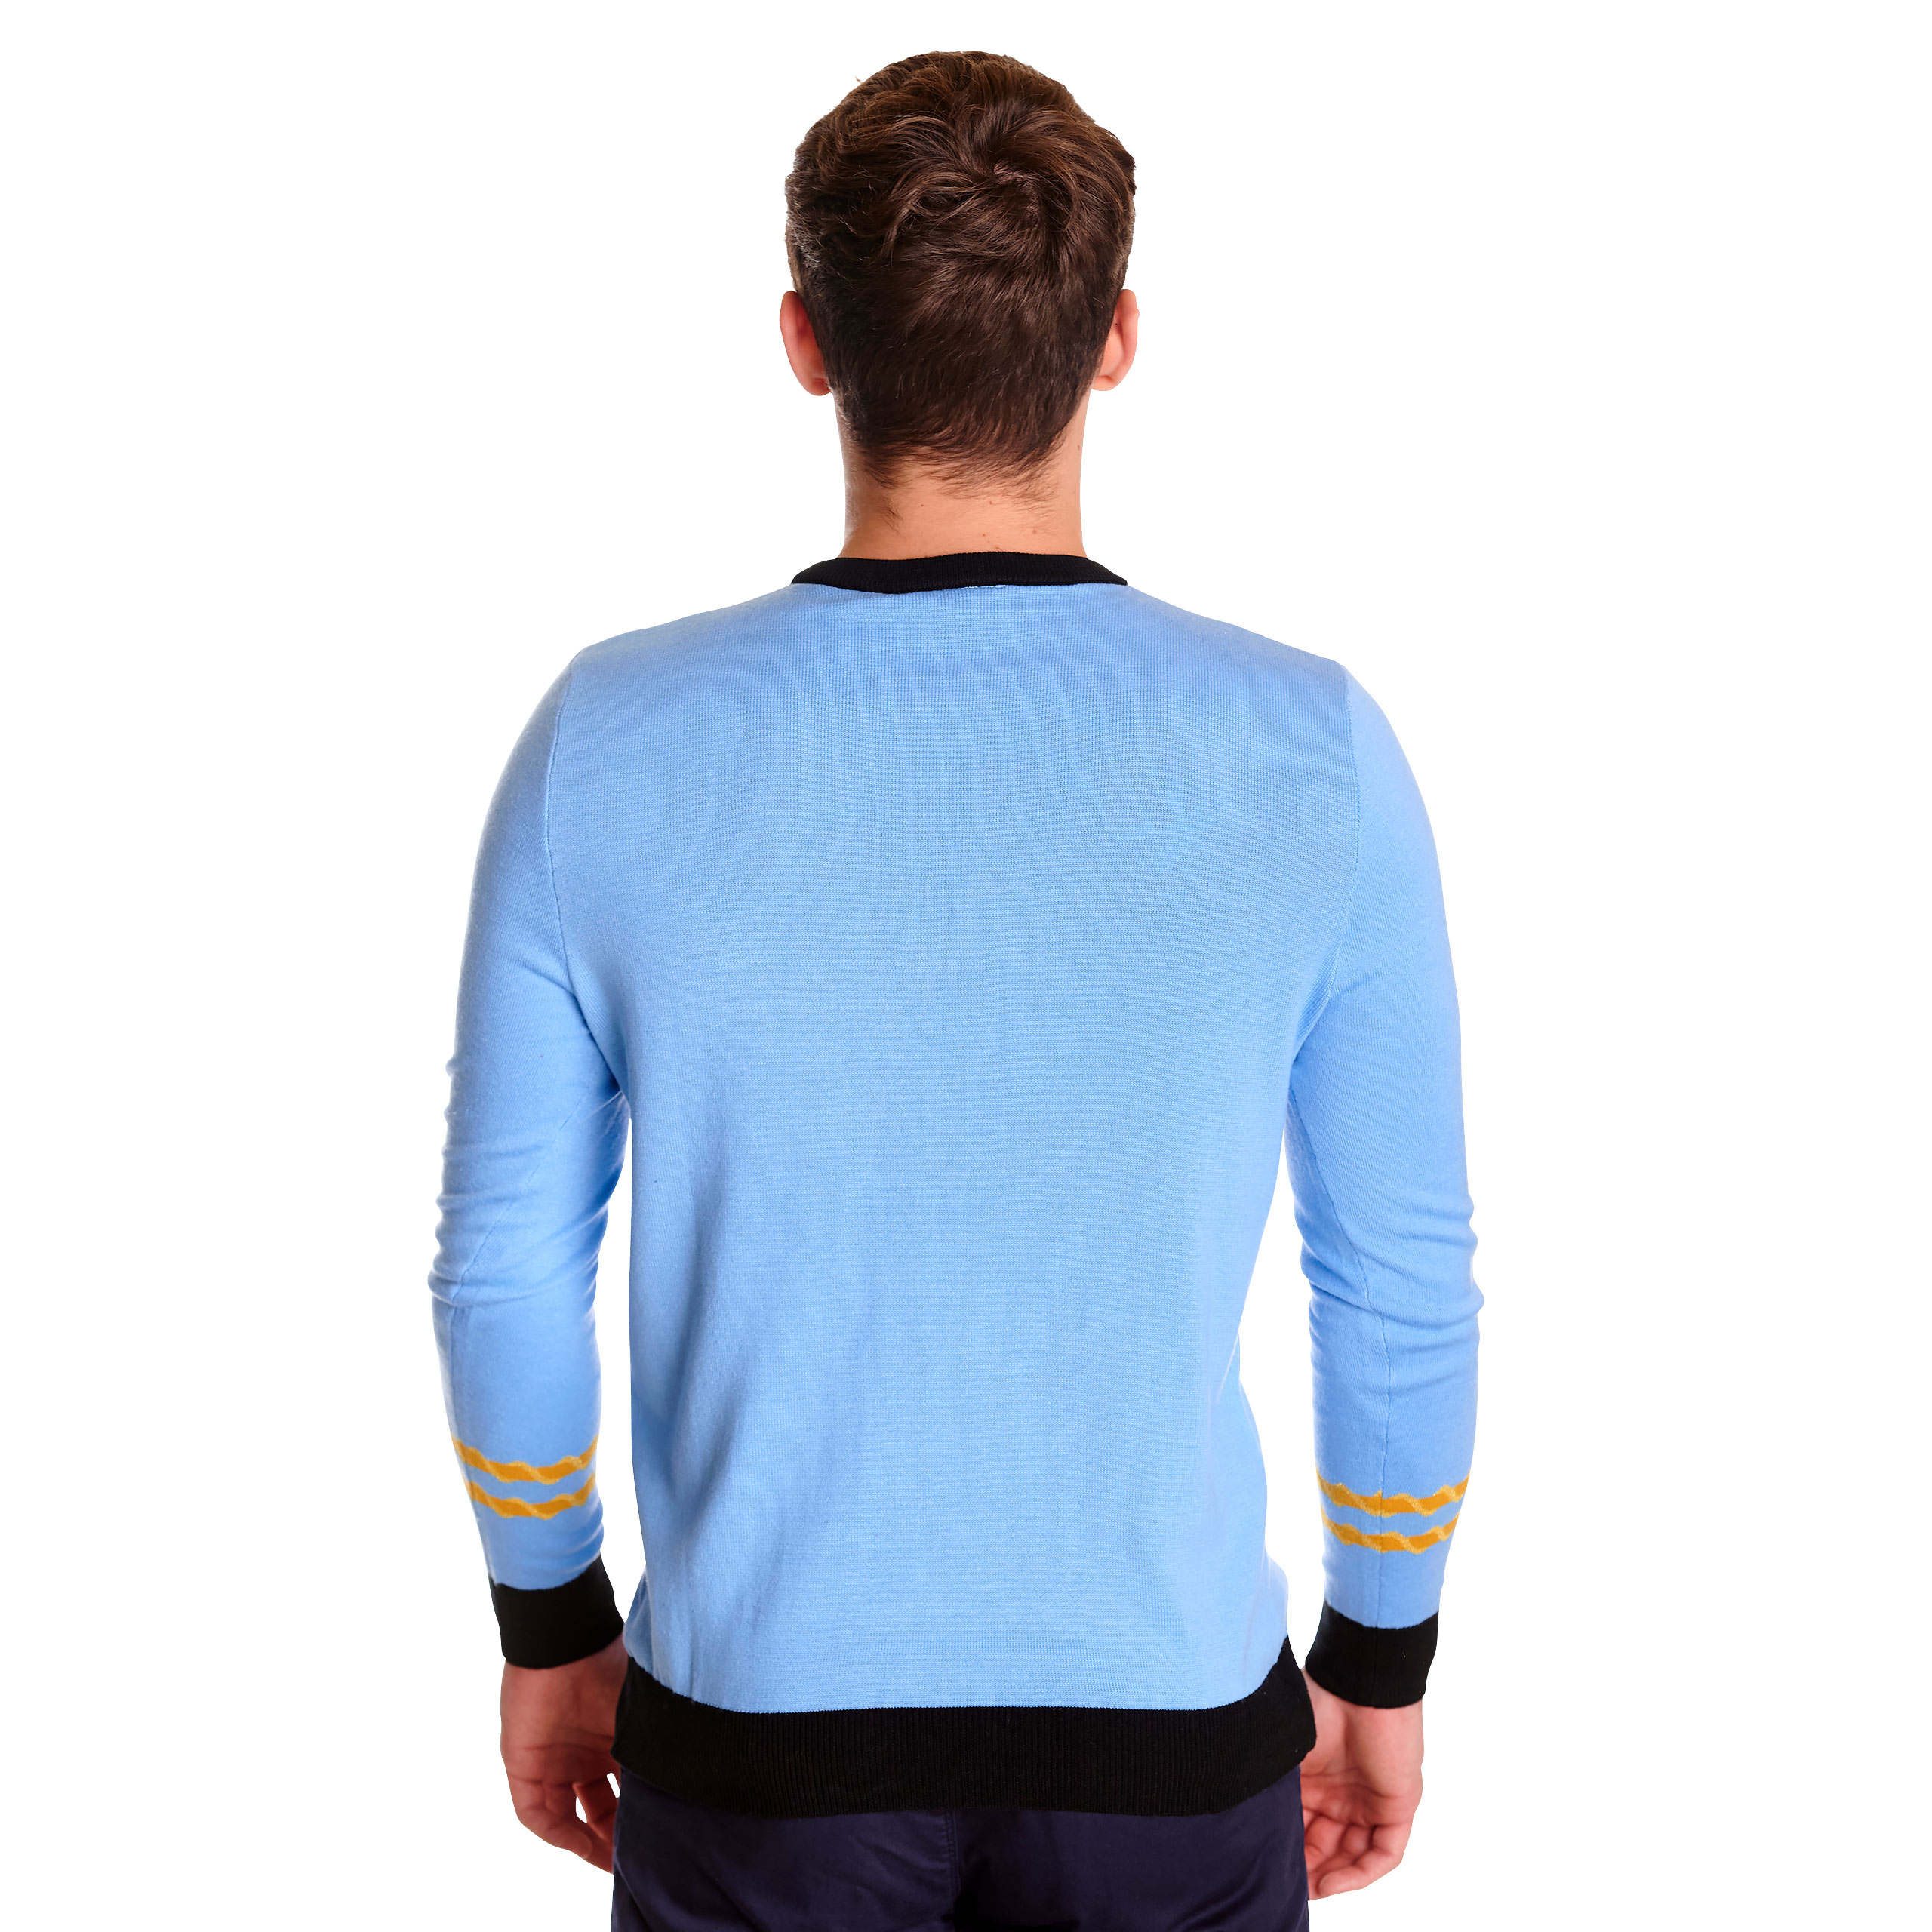 Star Trek - Mister Spock Uniform Knit Sweater Blue